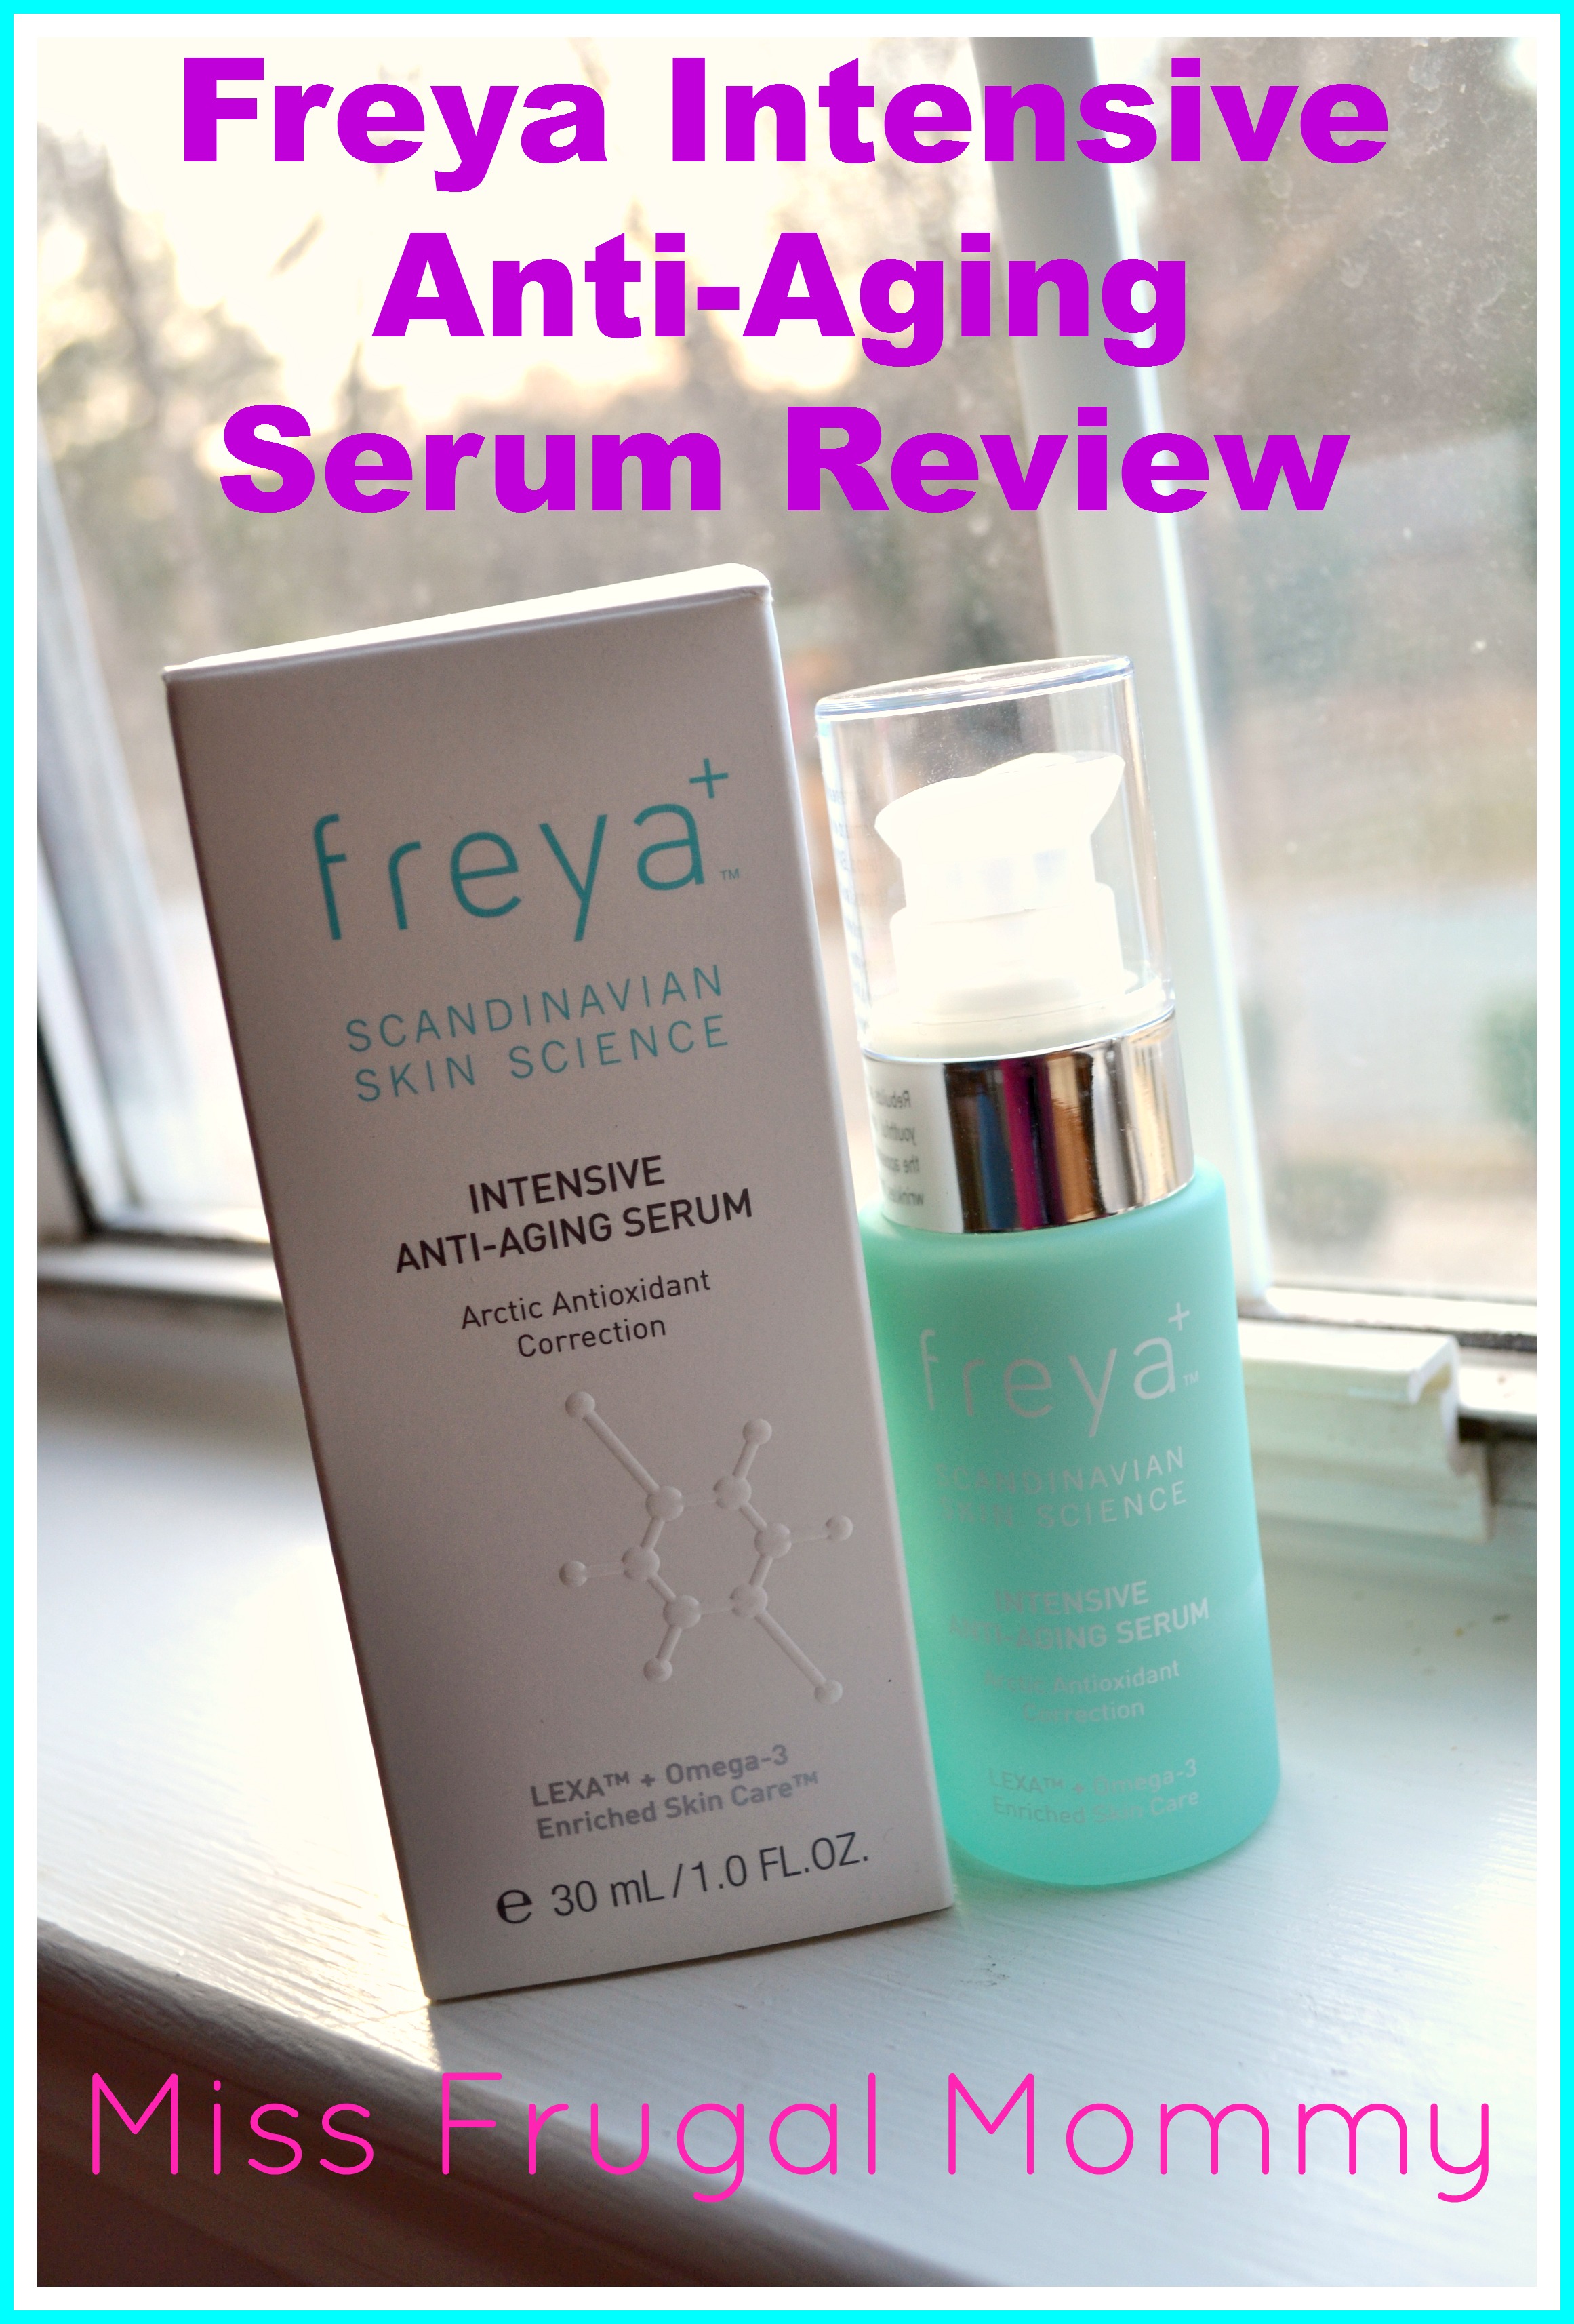 Freya Intensive Anti-Aging Serum Review